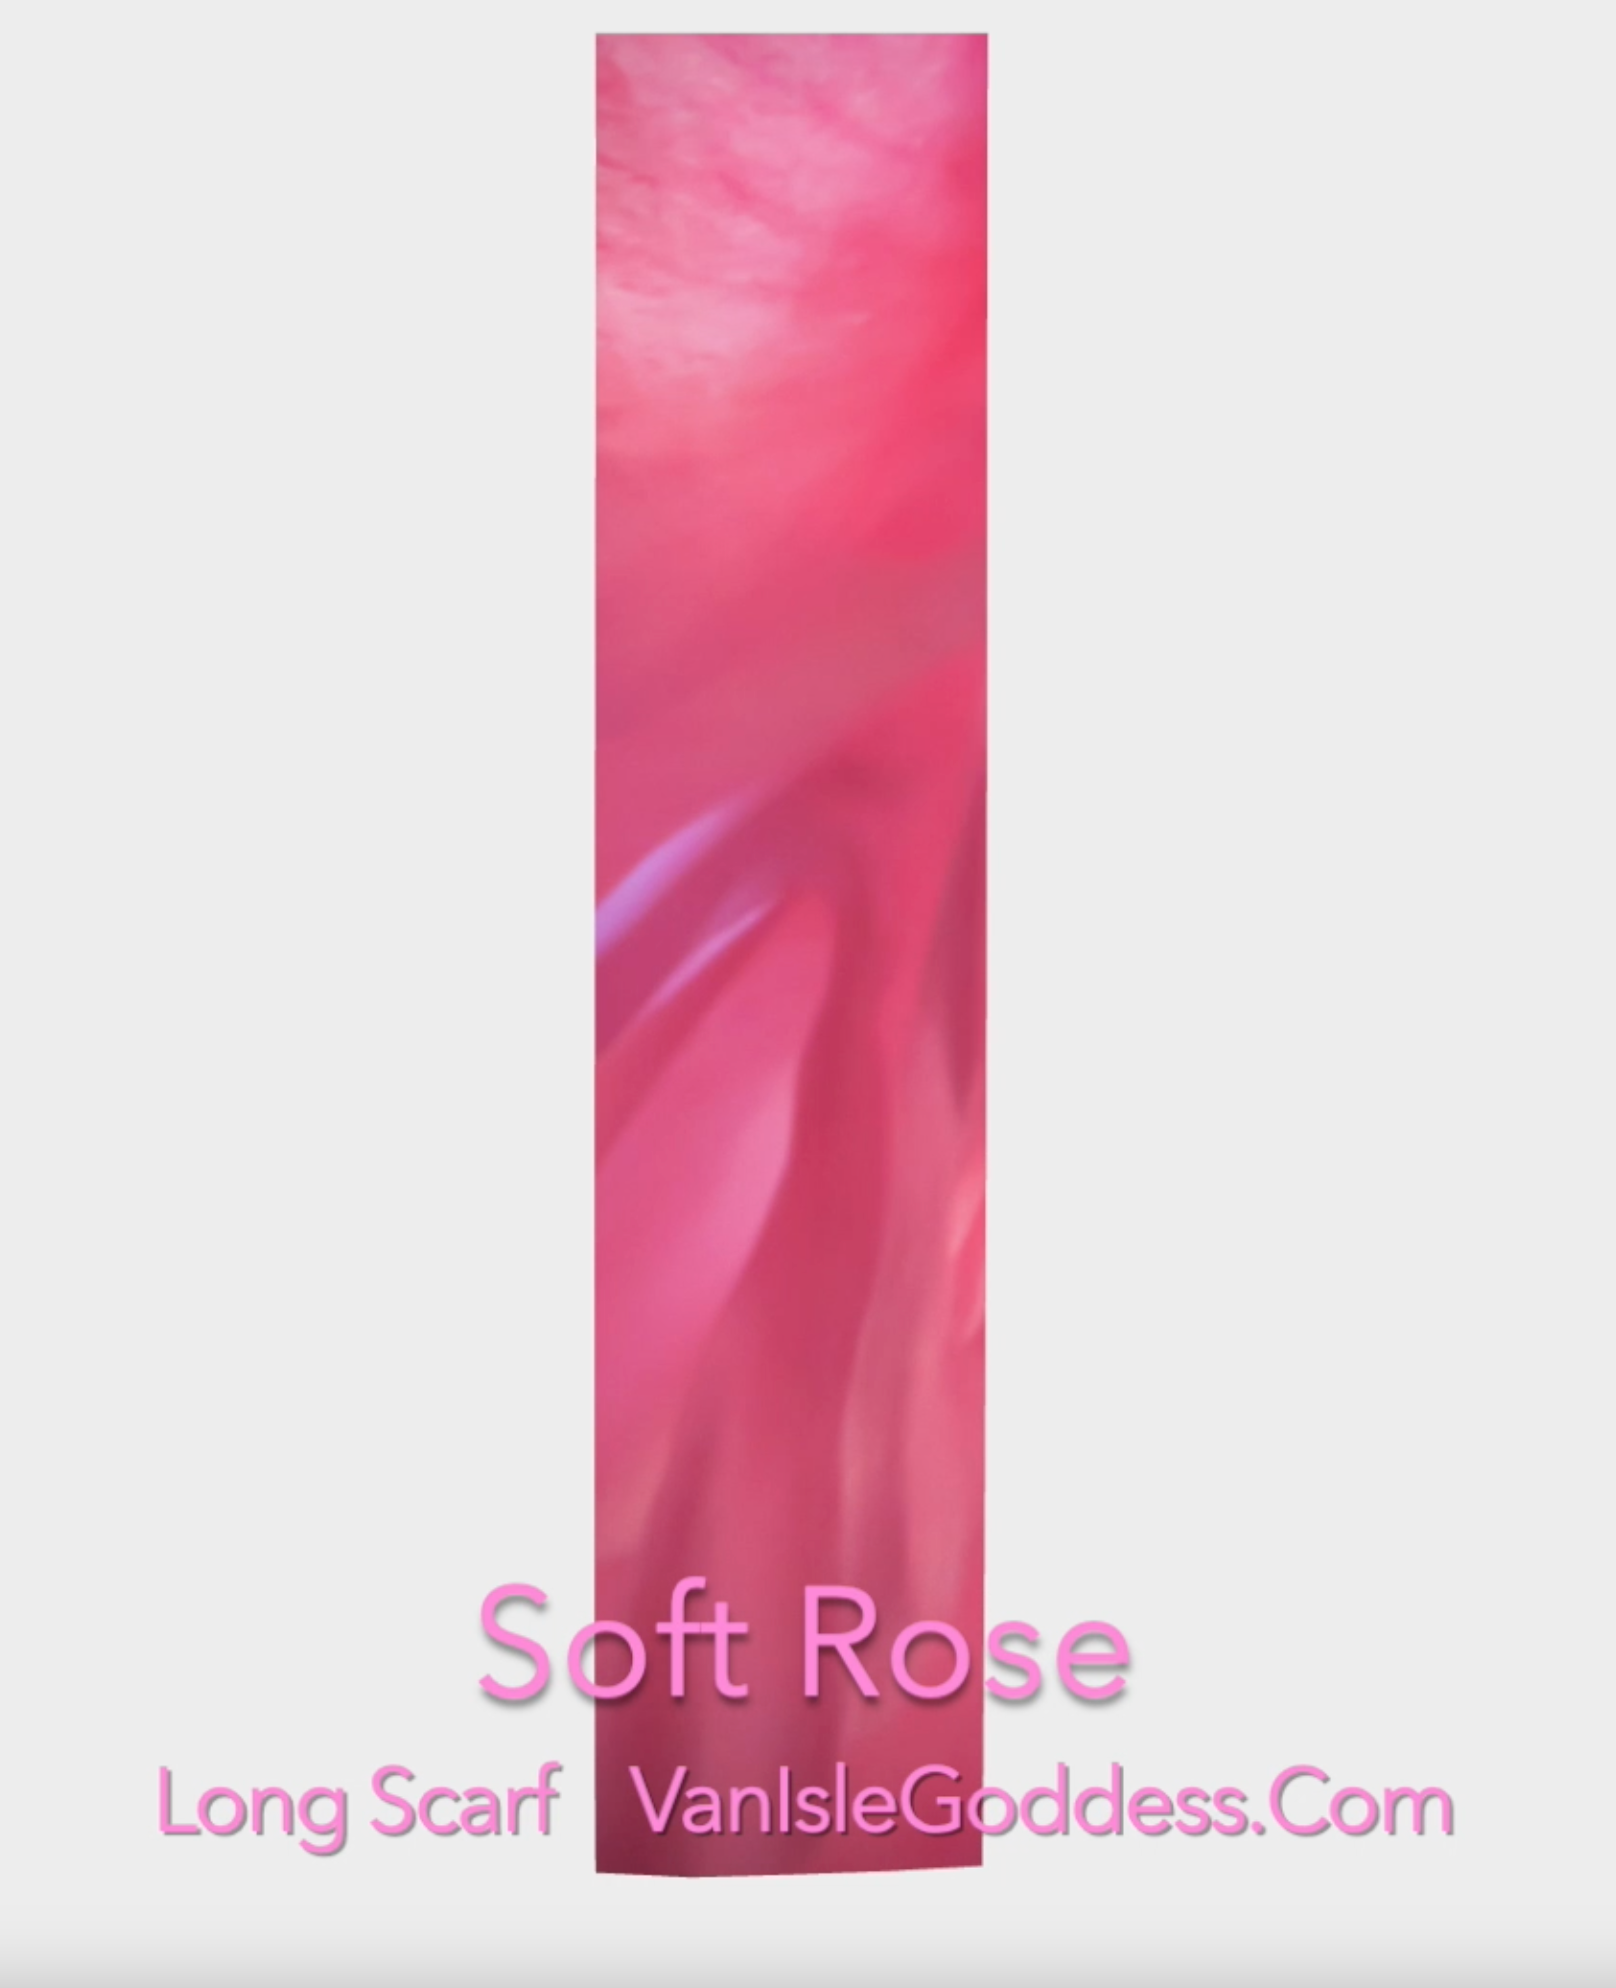 Soft Rose long scarf is shown full length.